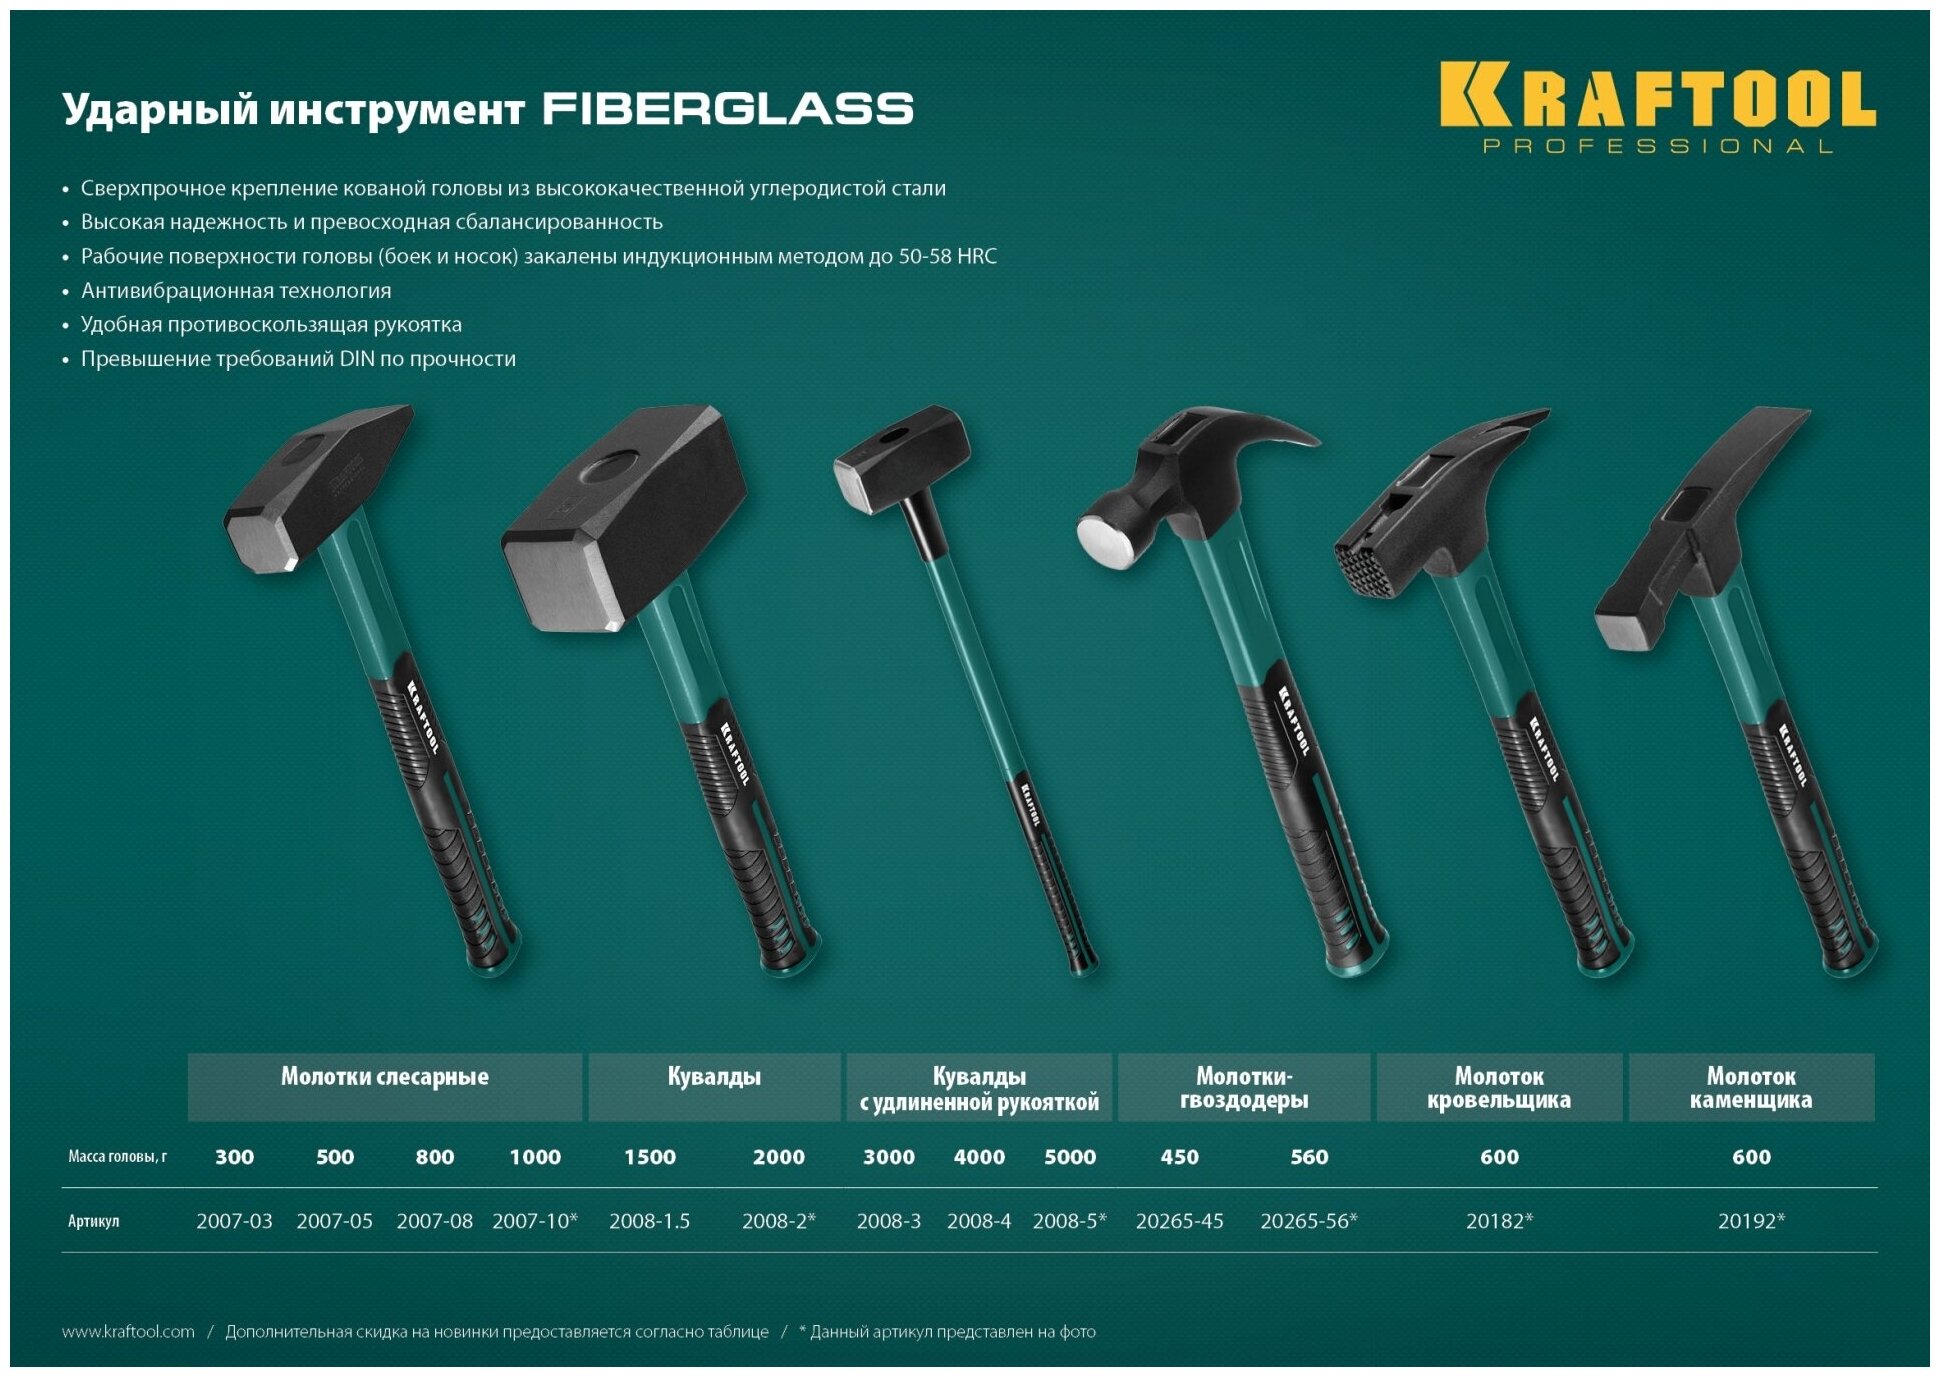 KRAFTOOL Fiberglass 600 г, Молоток каменщика (20192) - фотография № 7